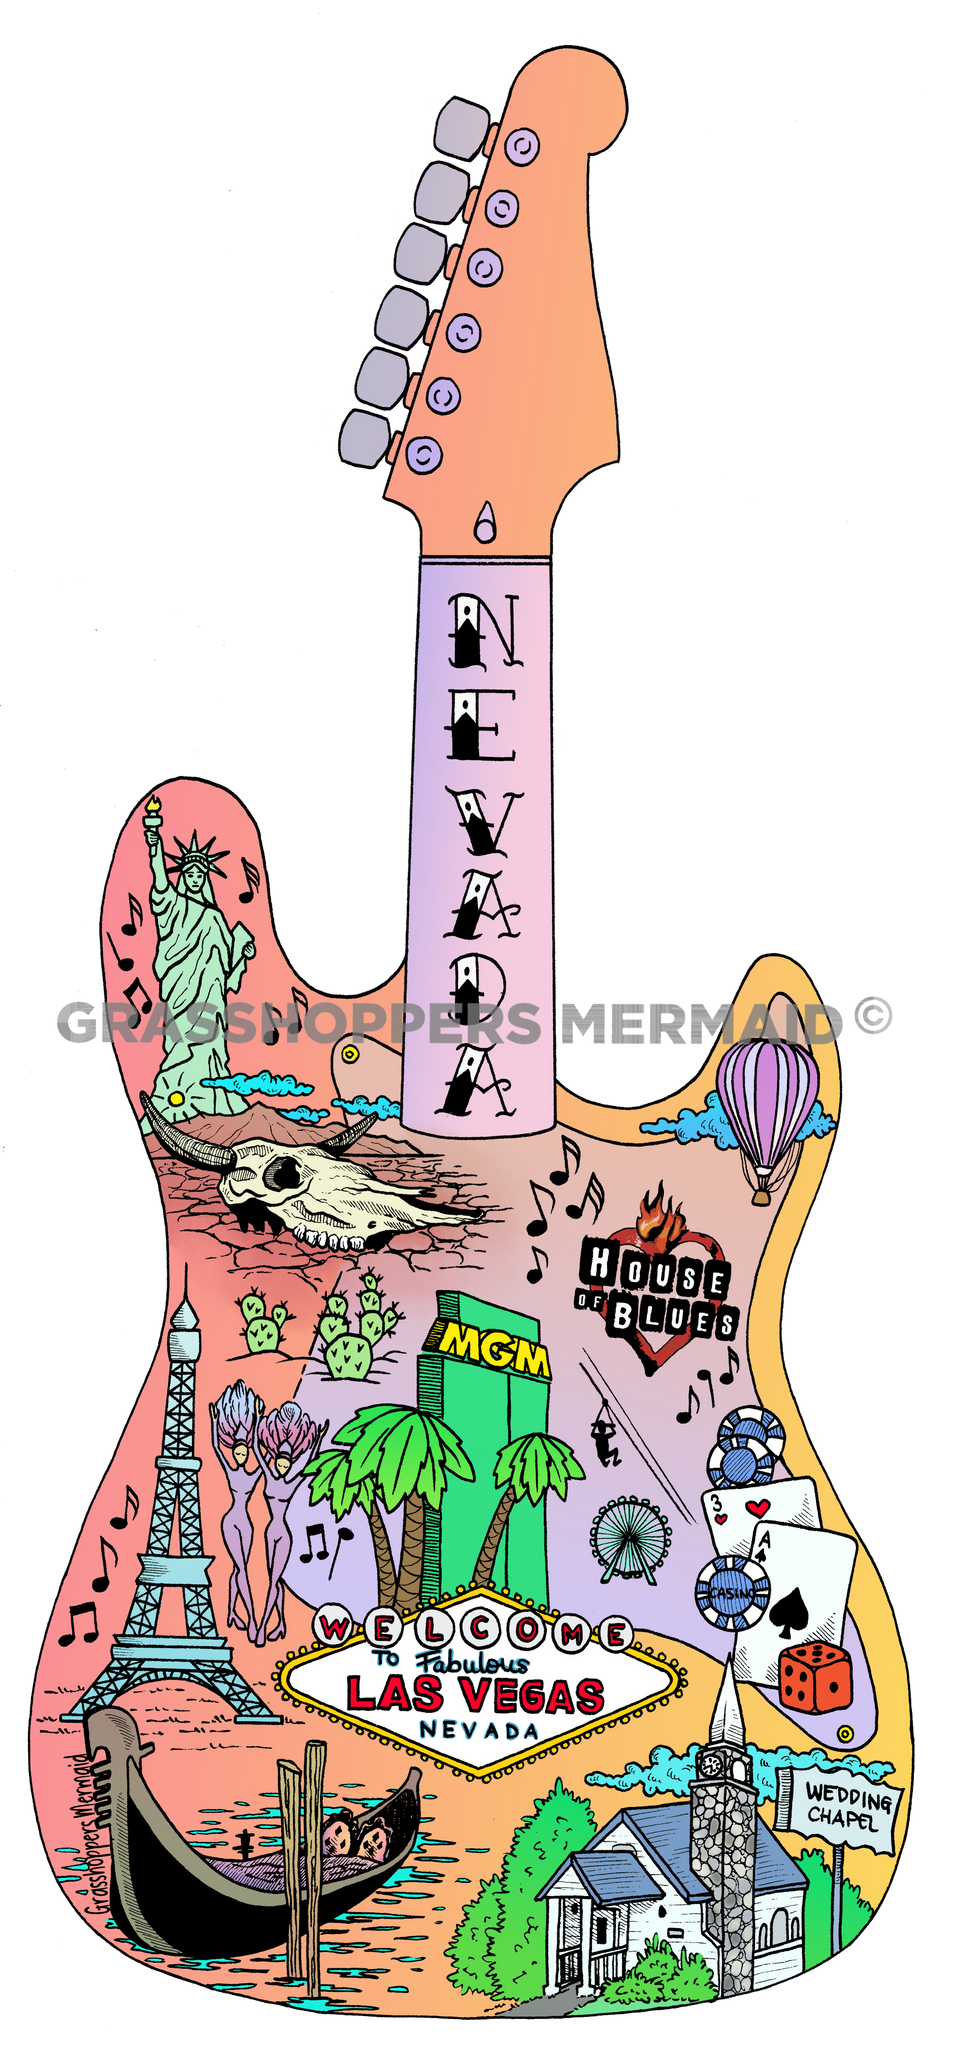 Las Vegas Guitar Mosaic